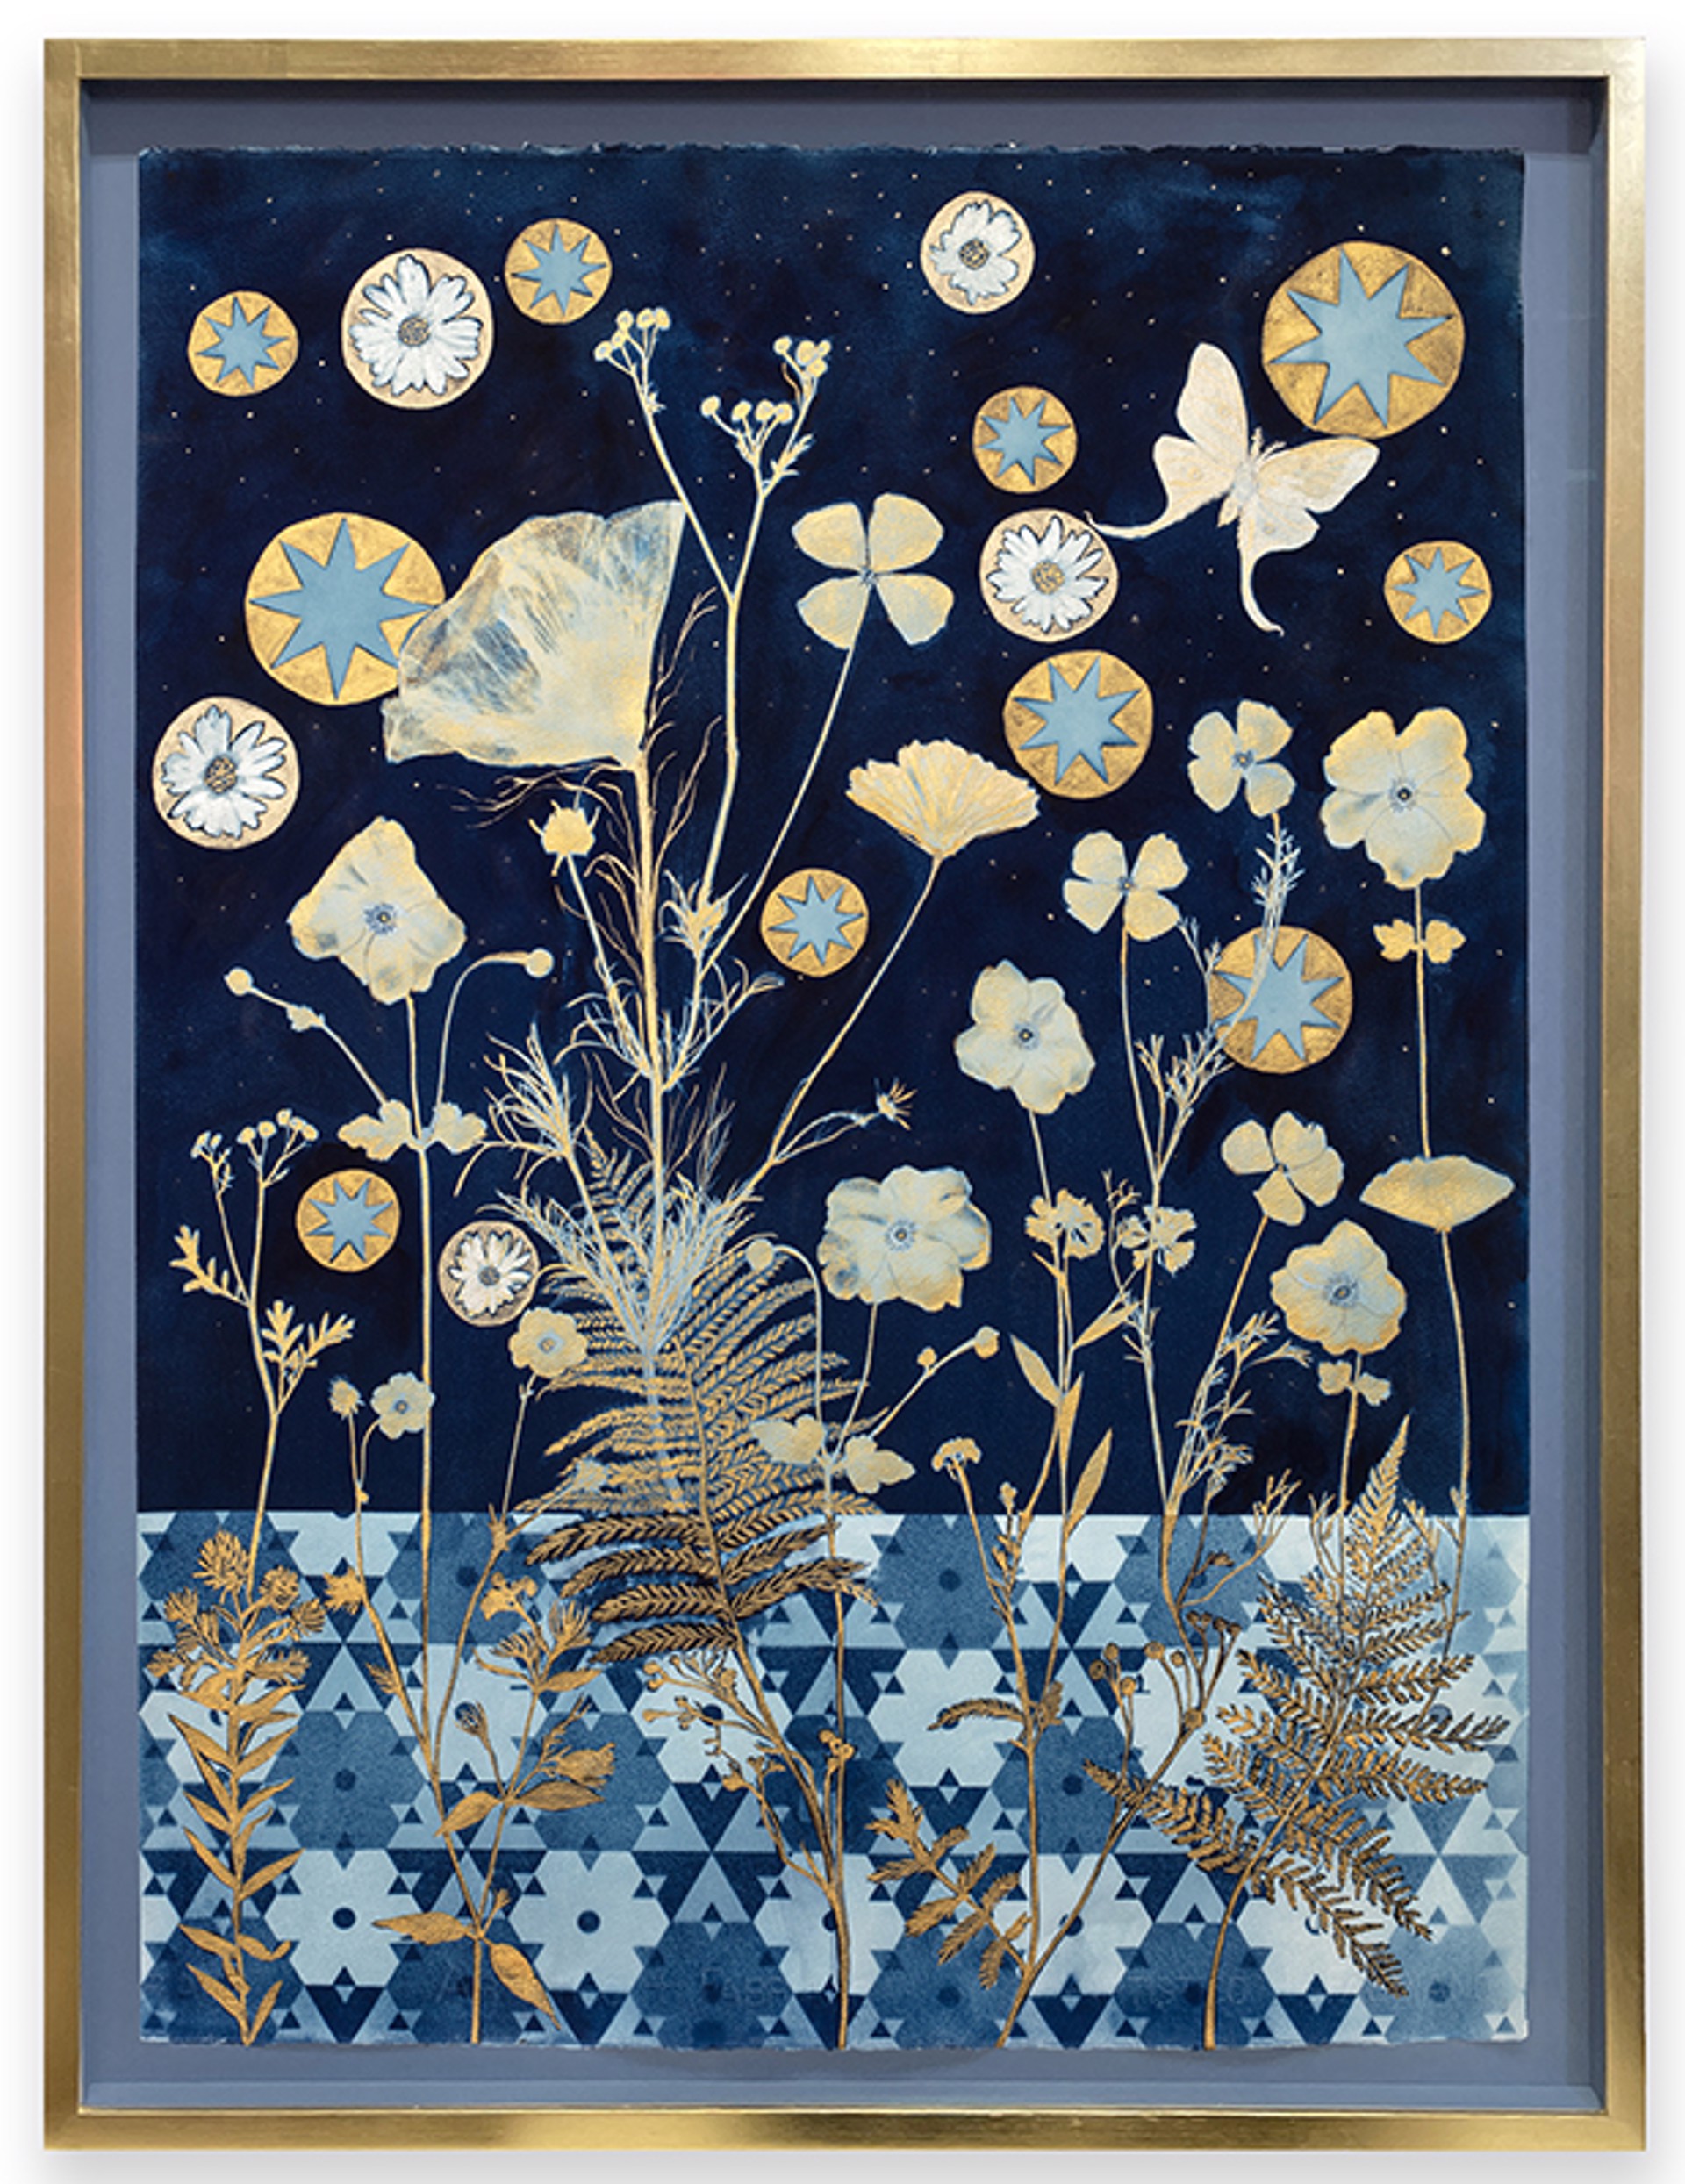 Cyanotype Painting (Gold Ferns, Anemones, Daisies, Luna Moth, Stars, Floor Pattern)) by Julia Whitney Barnes